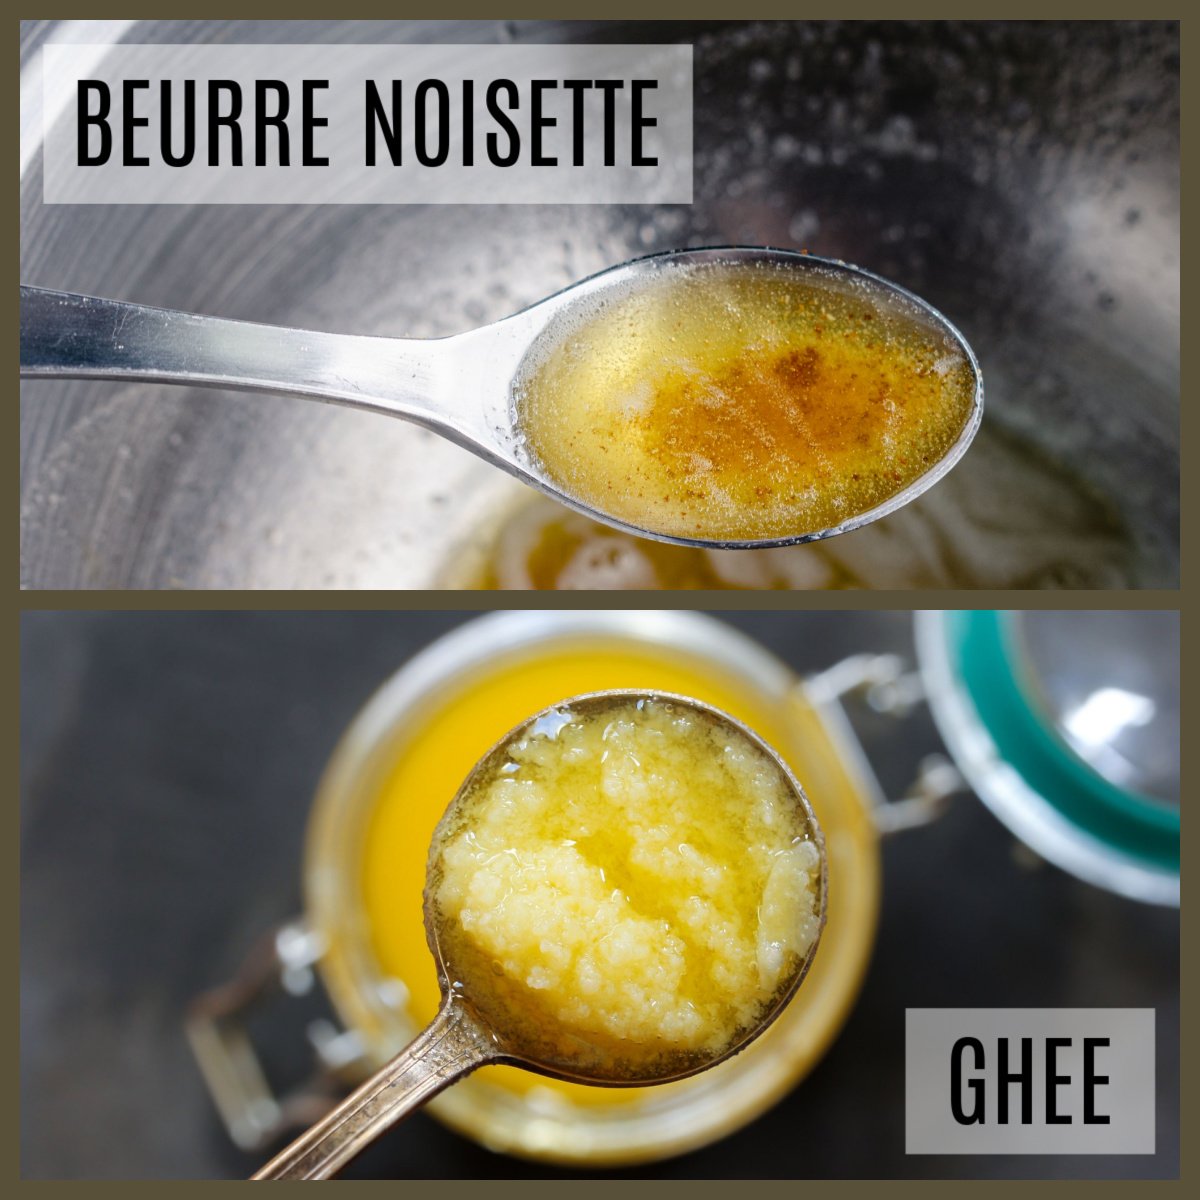 beurre noisette vs ghee differences